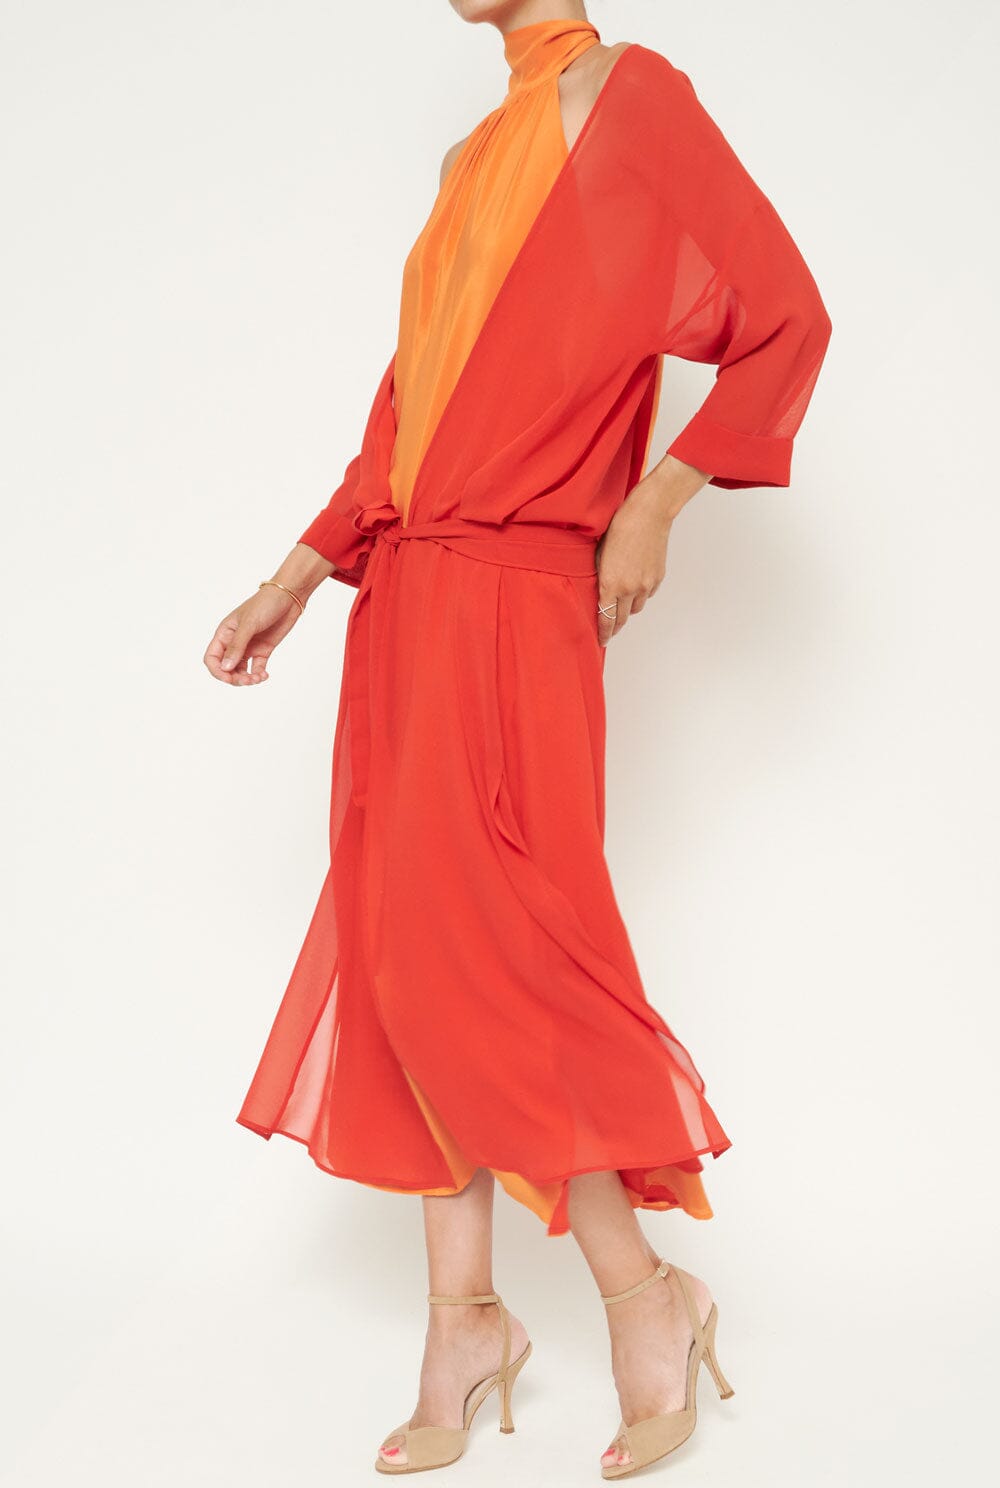 Persefone Red Kimono capes & shawls Atelier Aletheia 